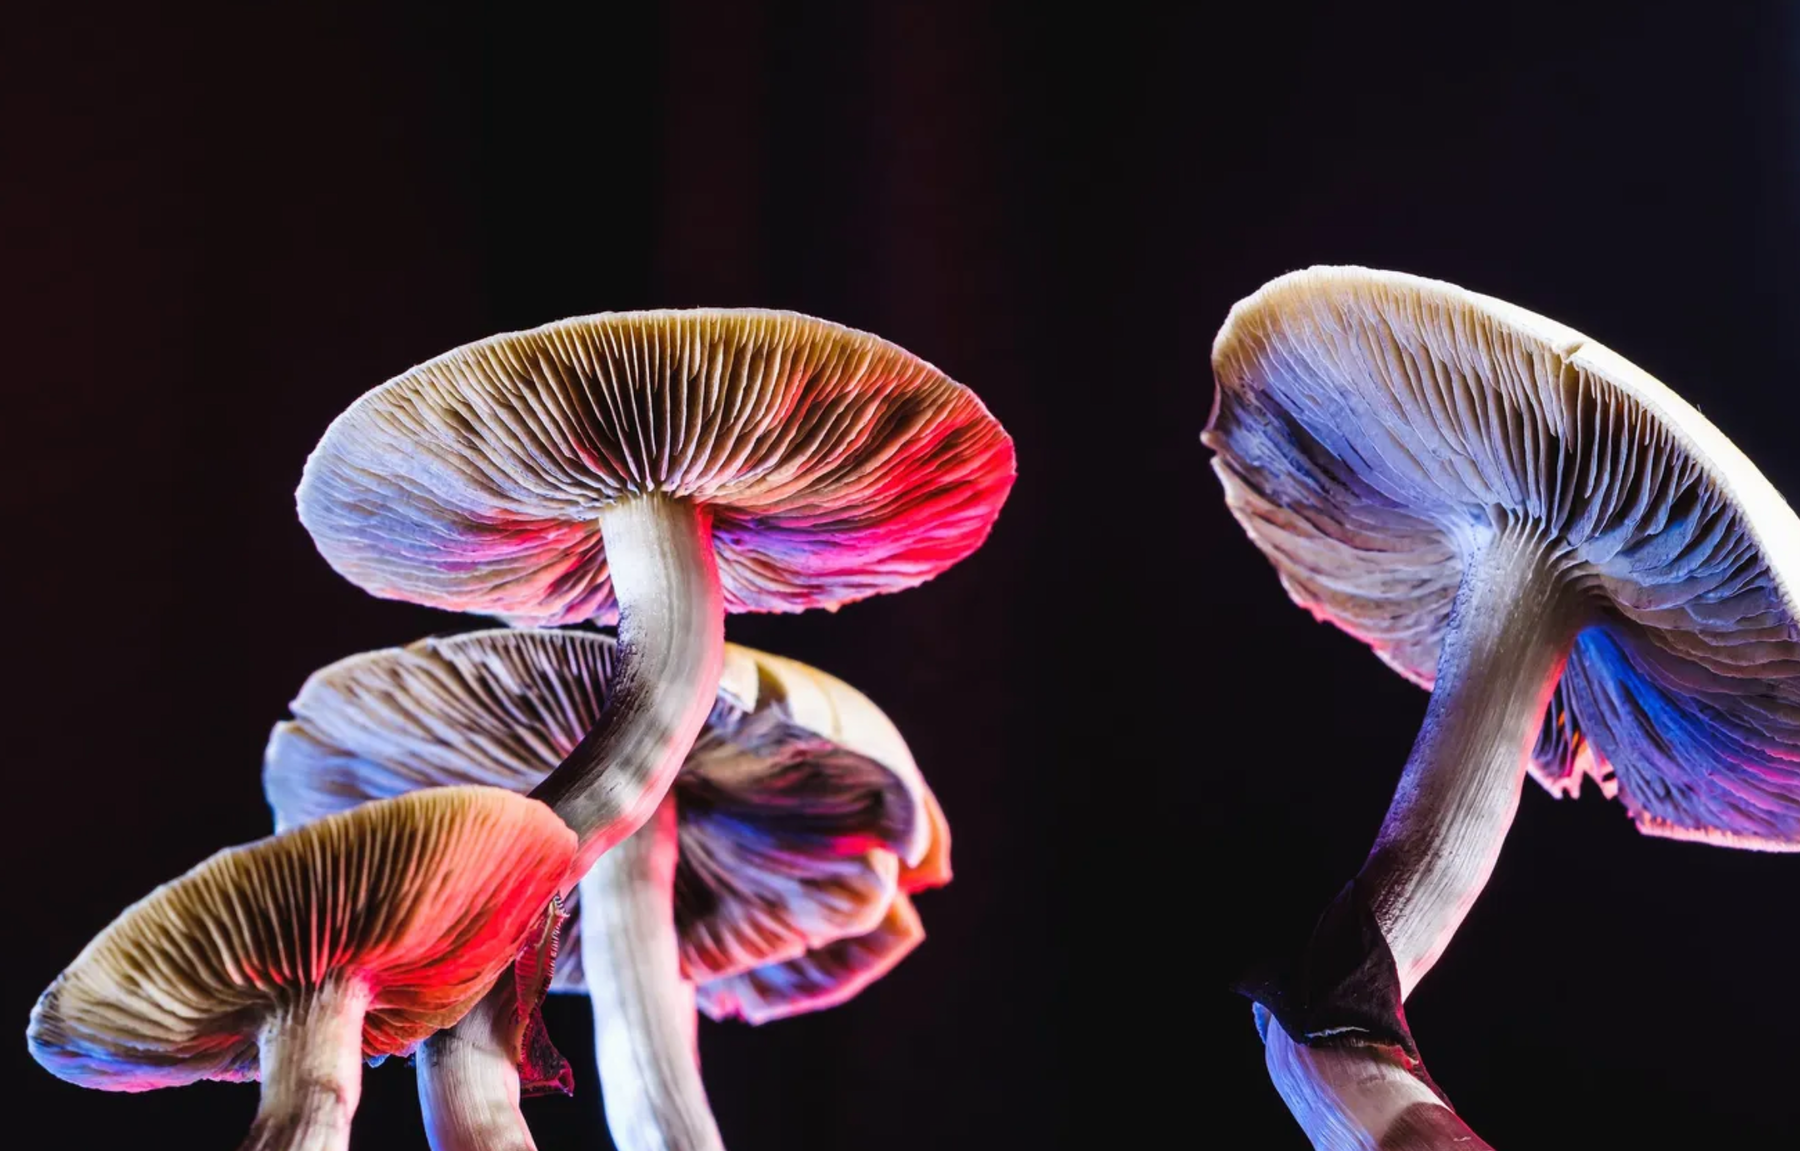 Can Mushrooms Cause Diarrhea?